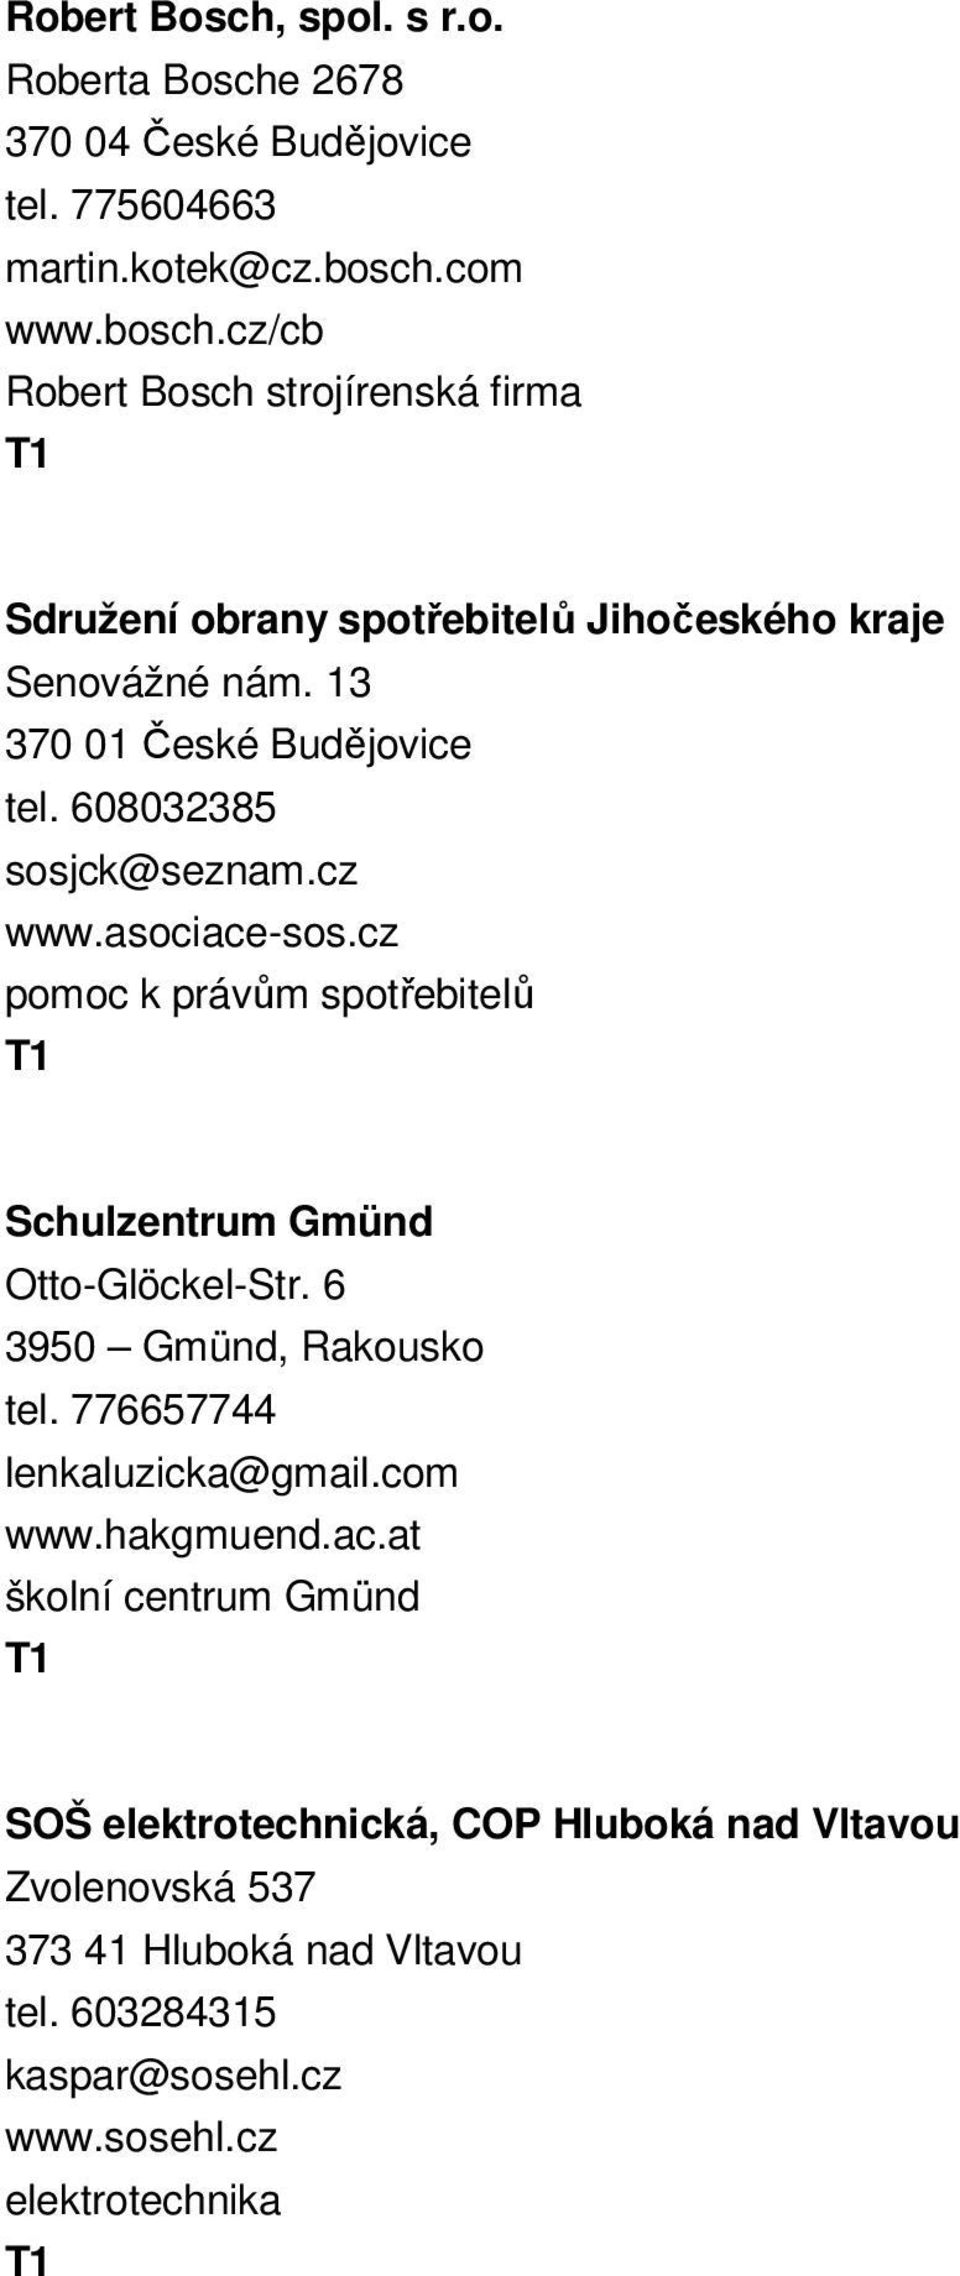 608032385 sosjck@seznam.cz www.asociace-sos.cz pomoc k právům spotřebitelů Schulzentrum Gmünd Otto-Glöckel-Str. 6 3950 Gmünd, Rakousko tel.